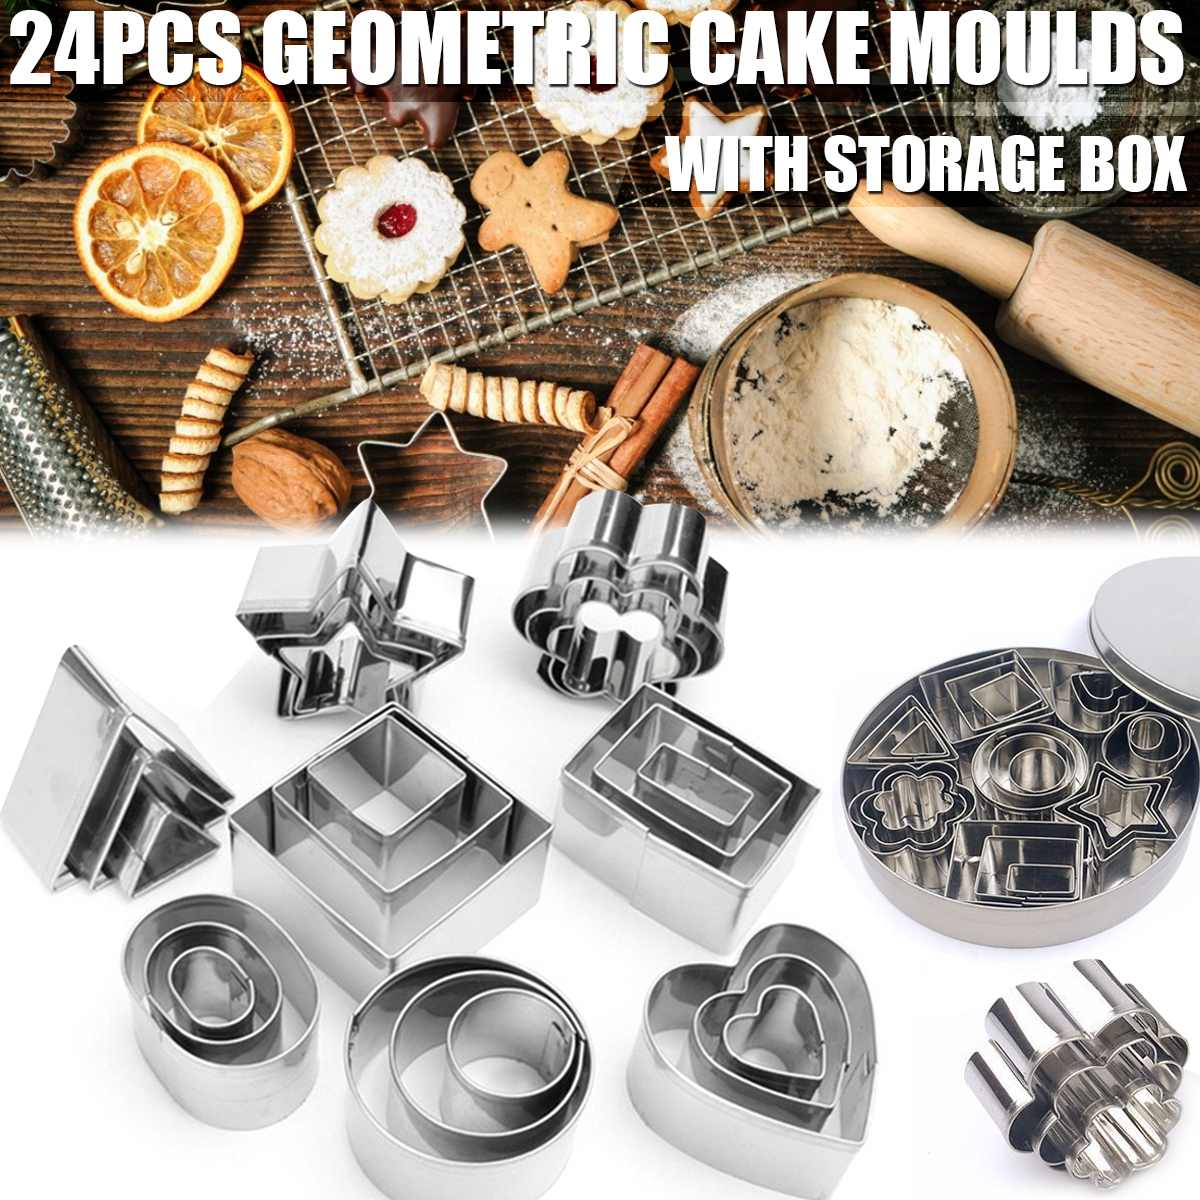 24 Stks/partij Rvs Geometrie Ronde Vierkante Cookie Cakevorm Diy Keramische Aardewerk Polymer Clay Craft Cutting Mold